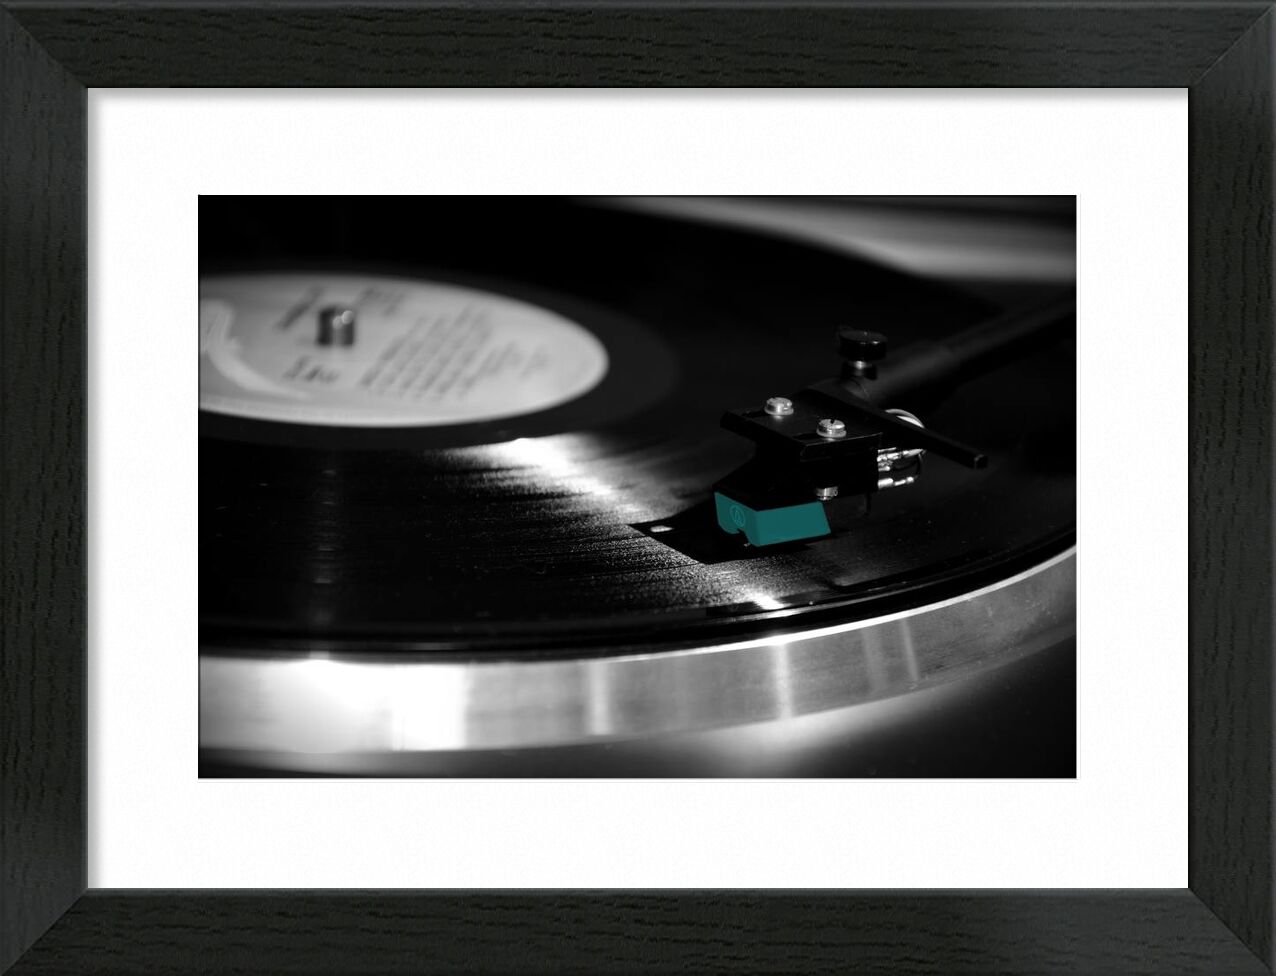 Vinyl head from Aliss ART, Prodi Art, vinyl, technology, record, phonograph record, inside, close-up, black